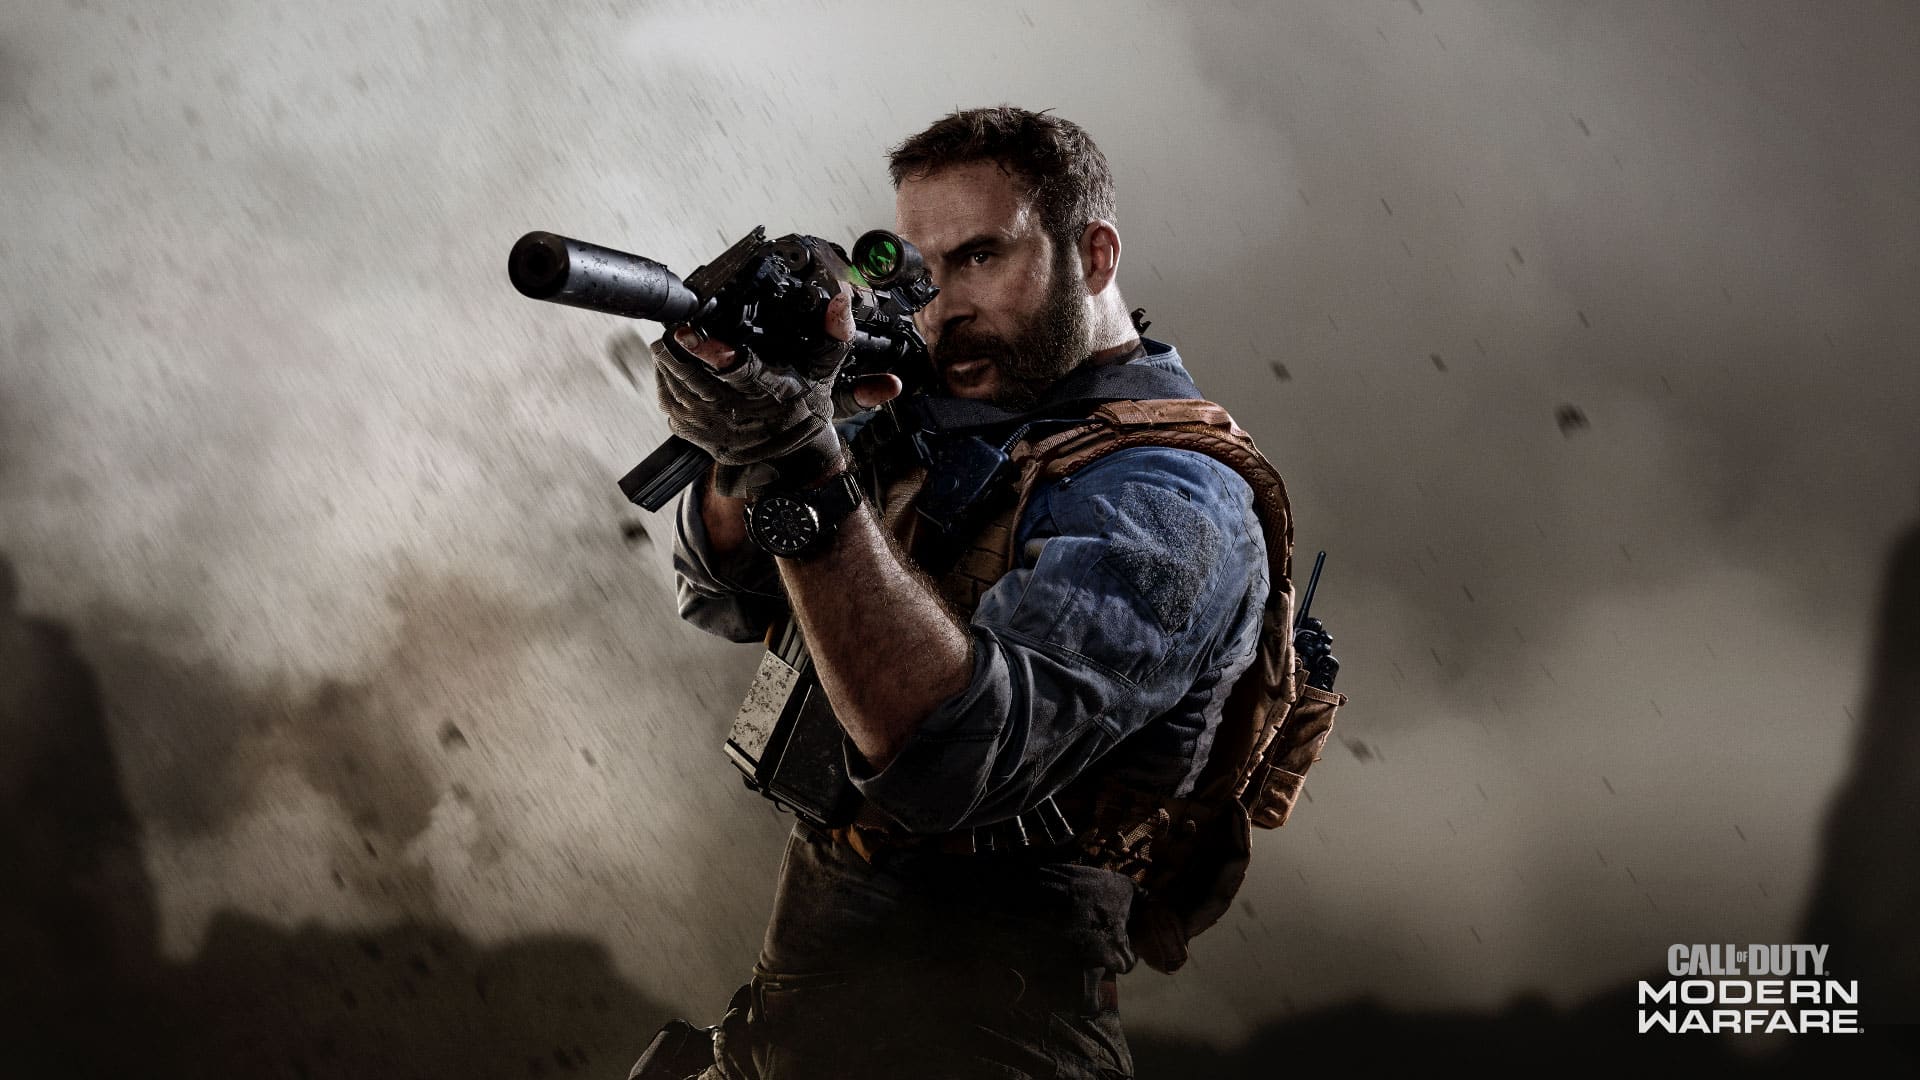 Call of Duty Modern Warfare free maps hardpoint new update